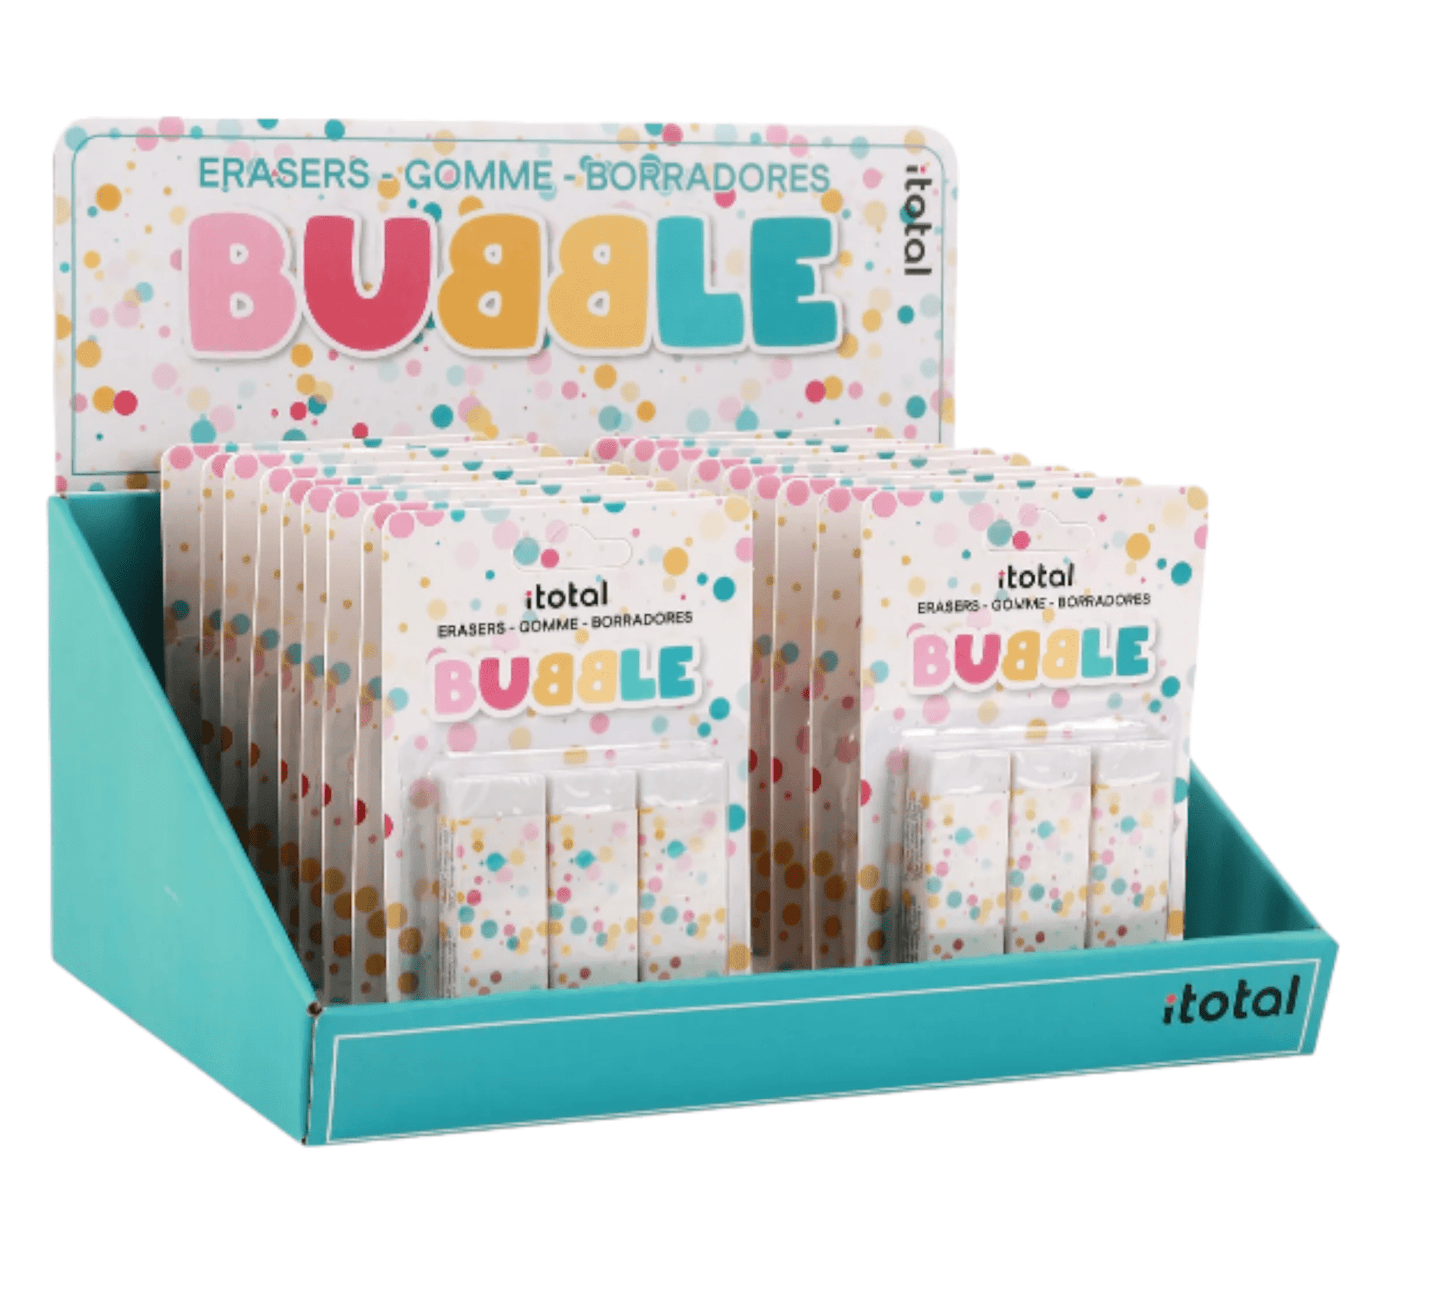 ROOST Radiergummi Bubble 3 Stk. - Siliblu Boutique & Atelier